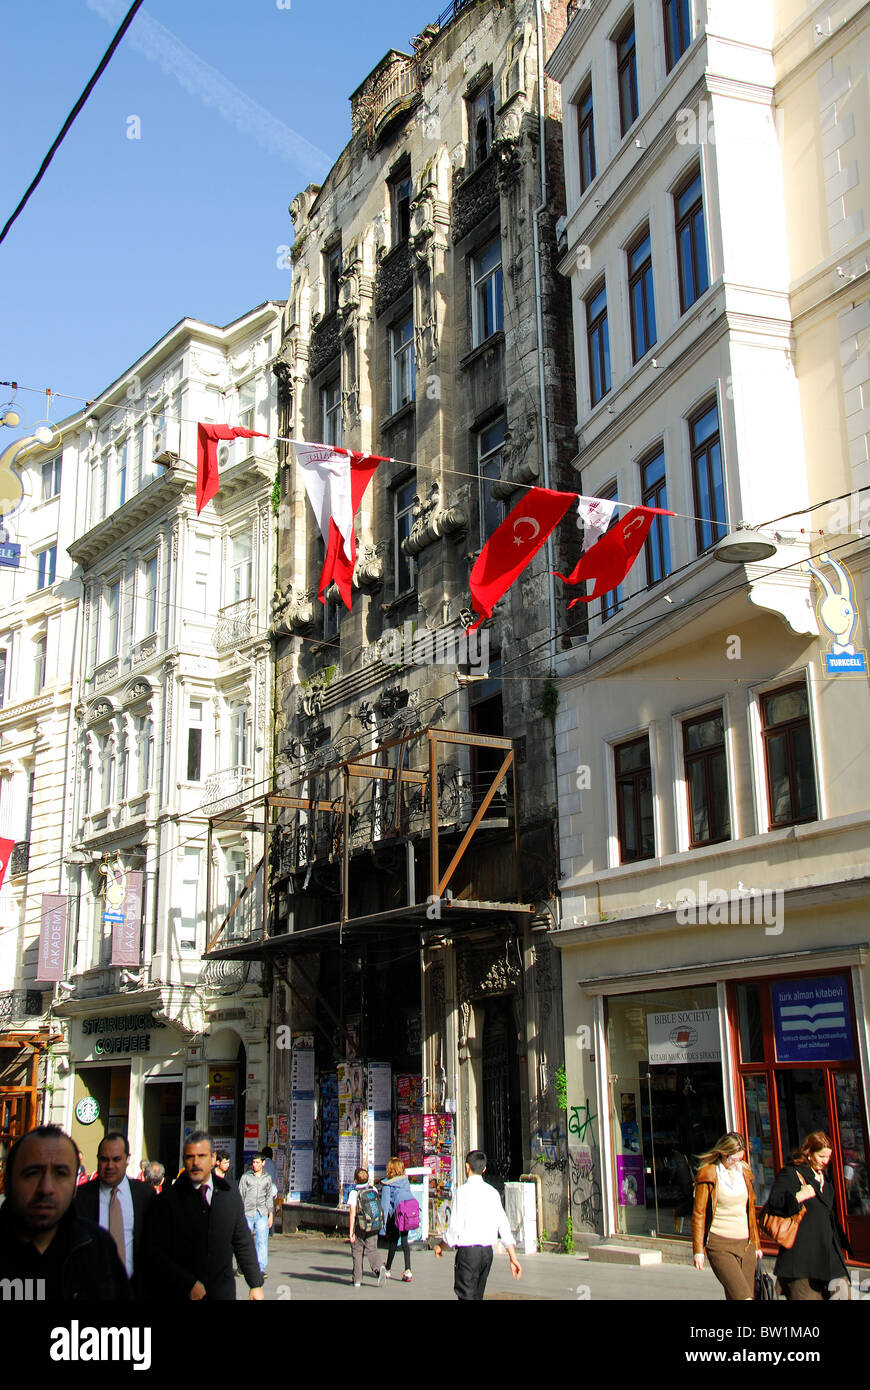 ISTANBUL, TURKEY. The semi-derelict Botter House prior to renovation on Istiklal Caddesi in Beyoglu district. 2010. Stock Photo